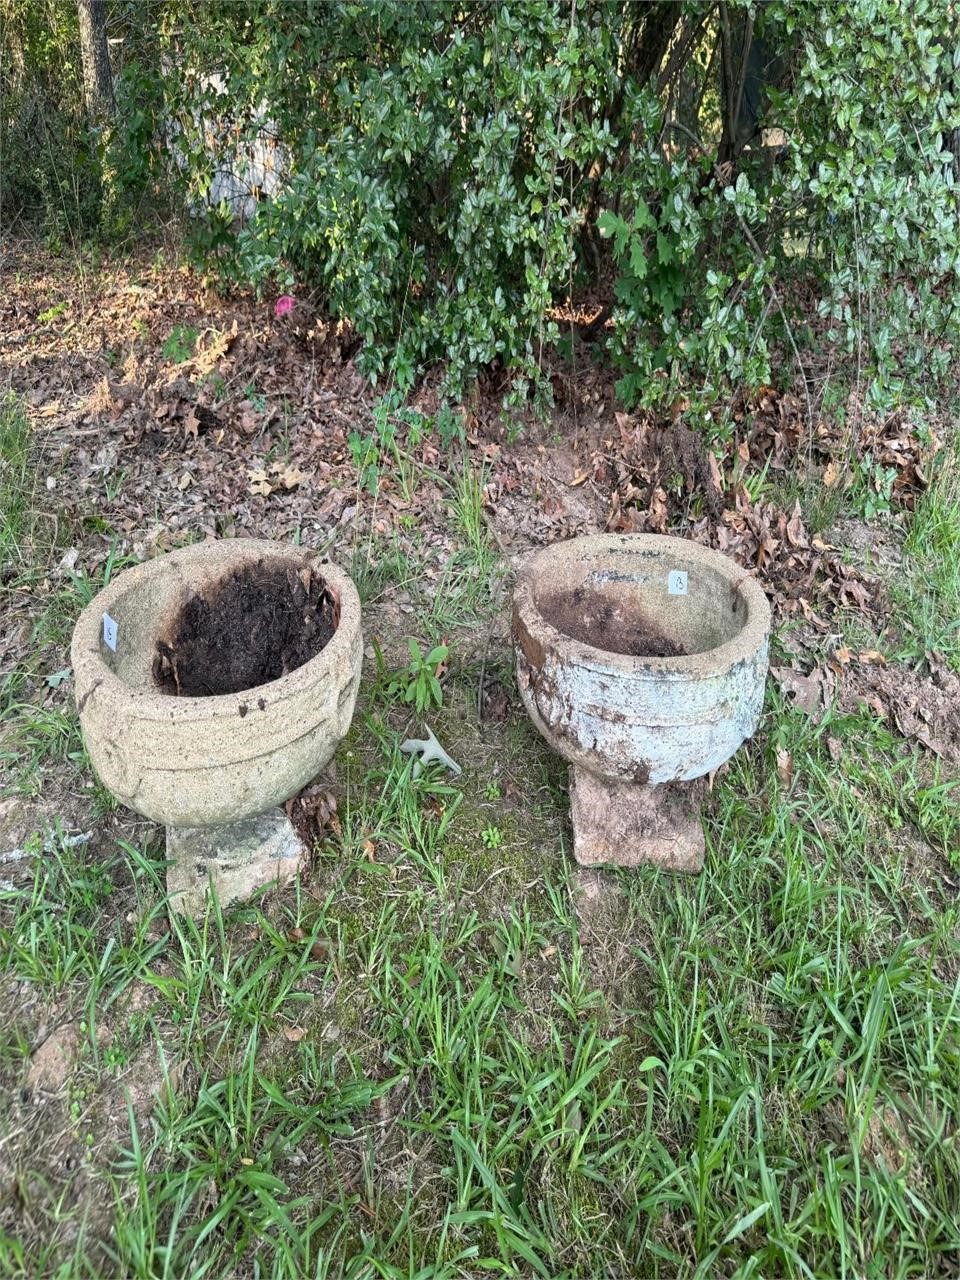 2 matching concrete flower planter- one has damage